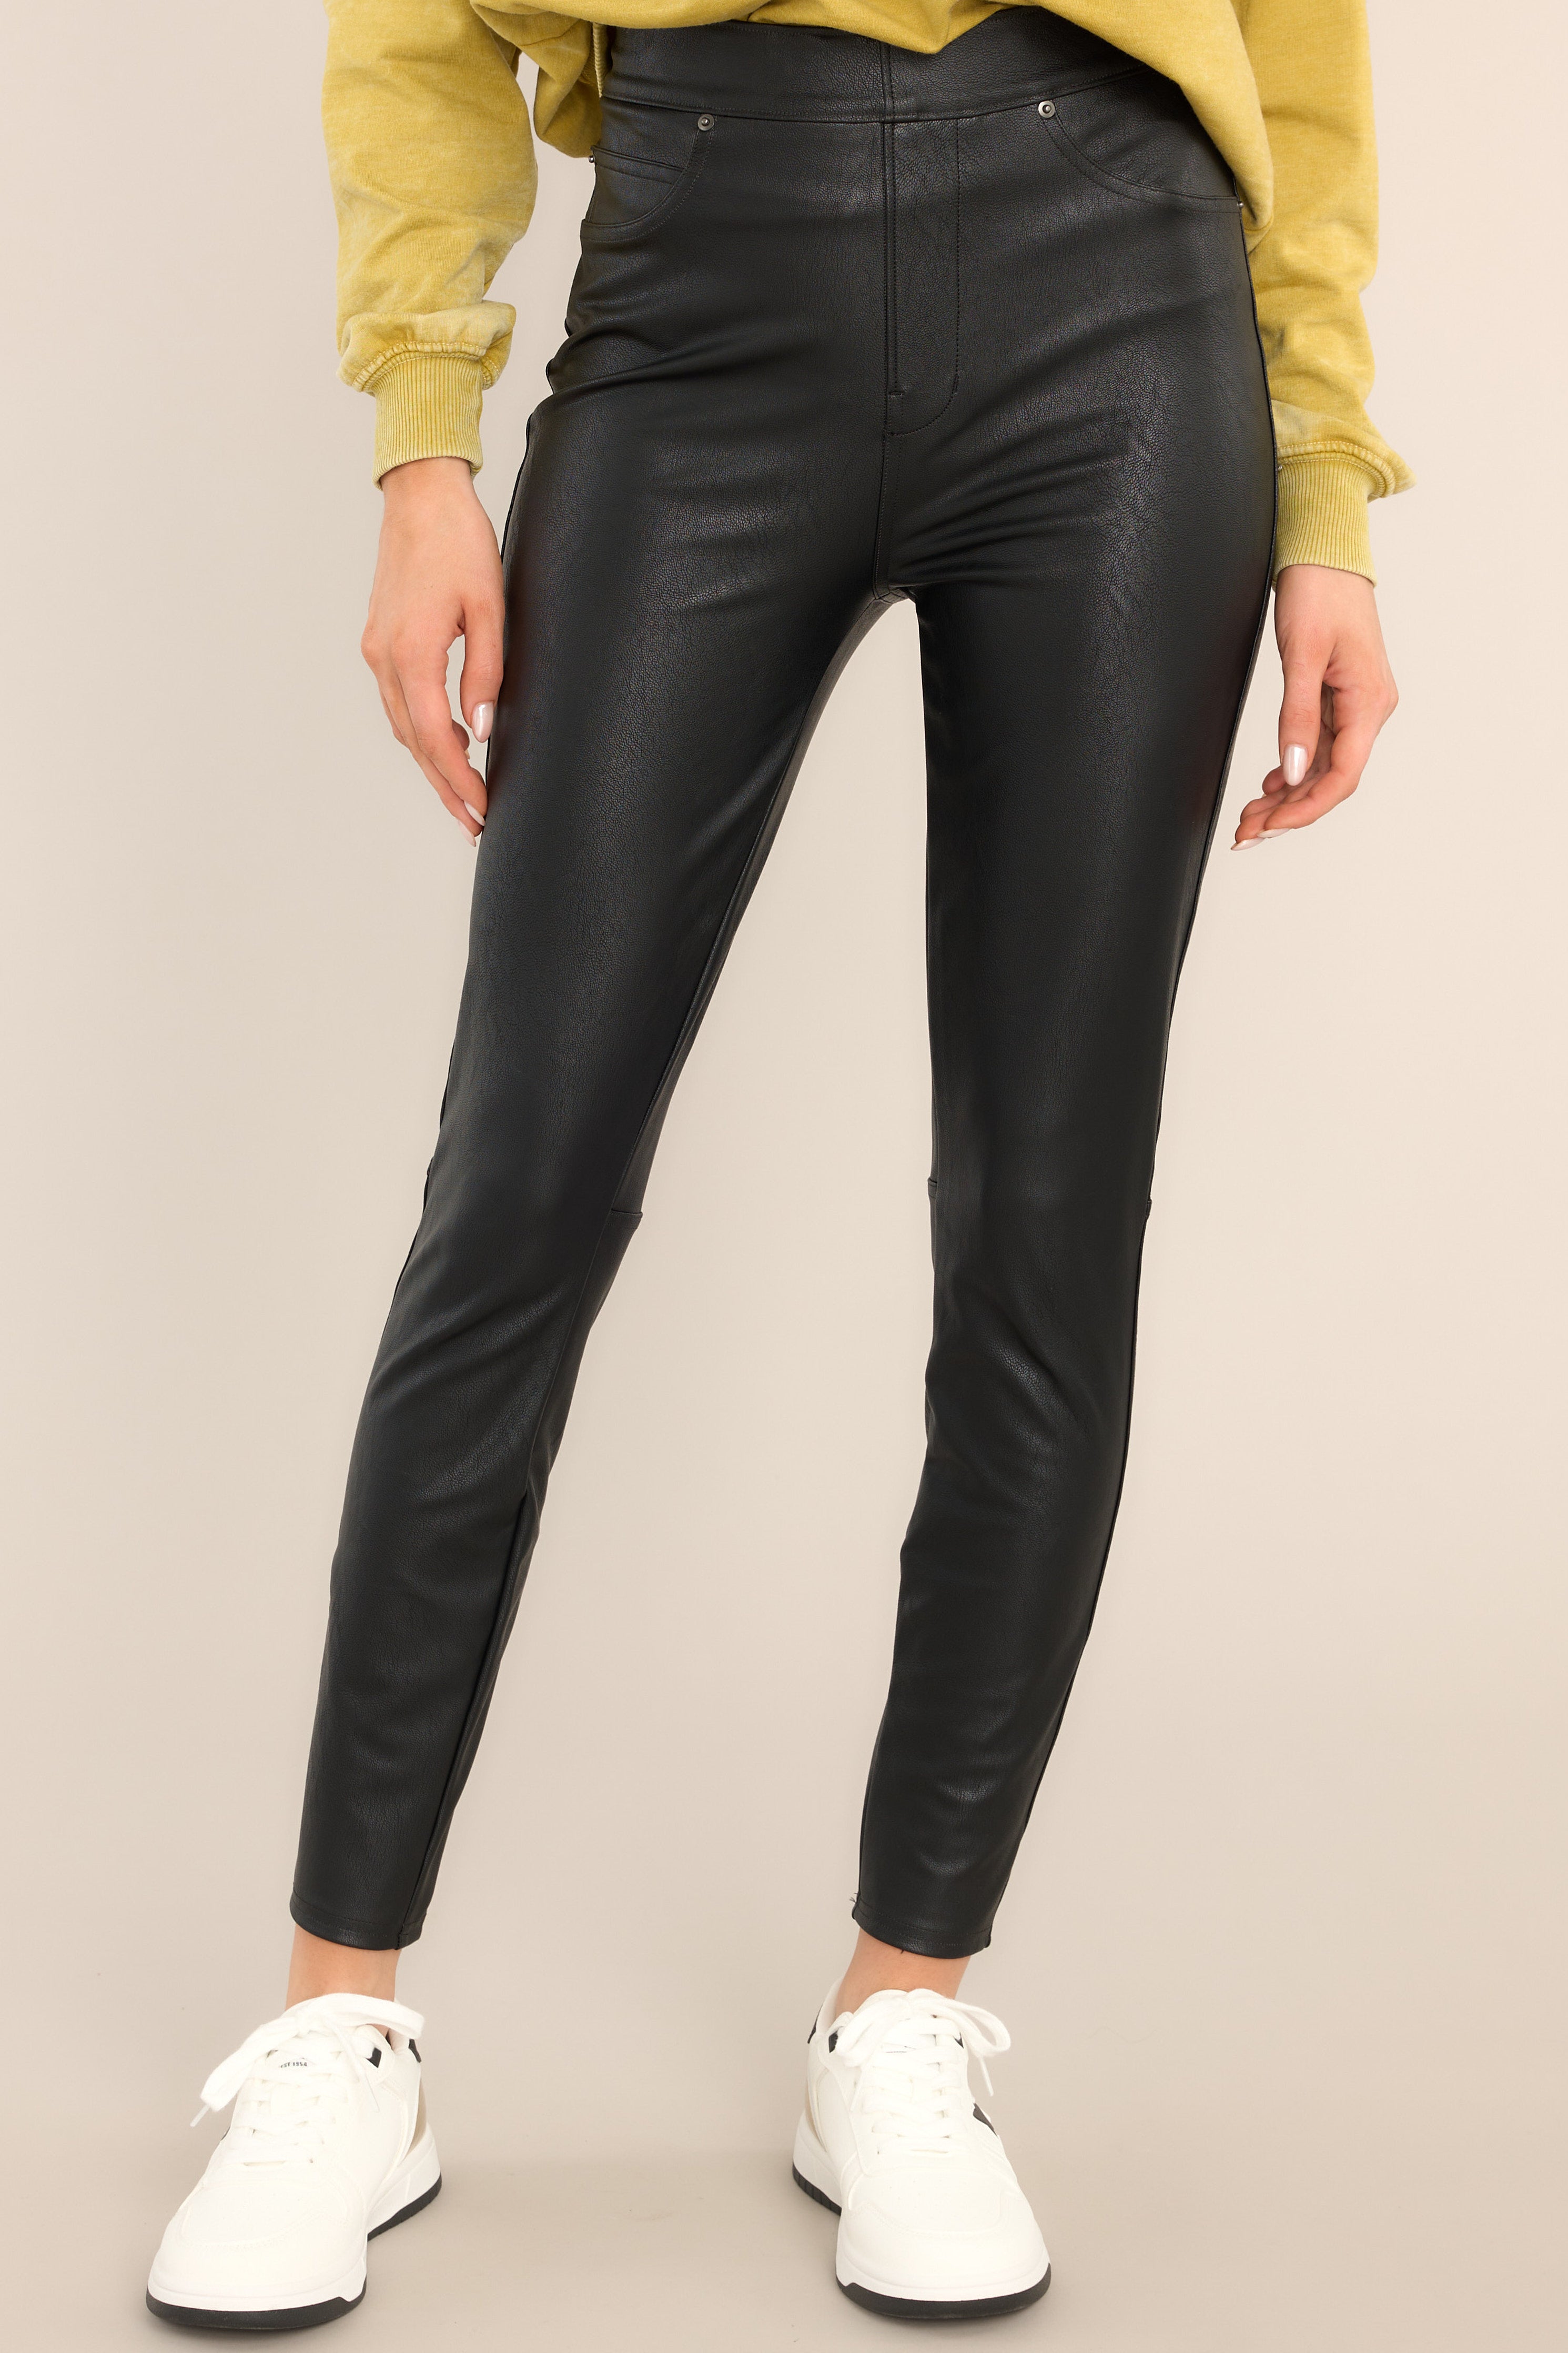 Spanx Black Leather-Like Ankle Skinny Pant